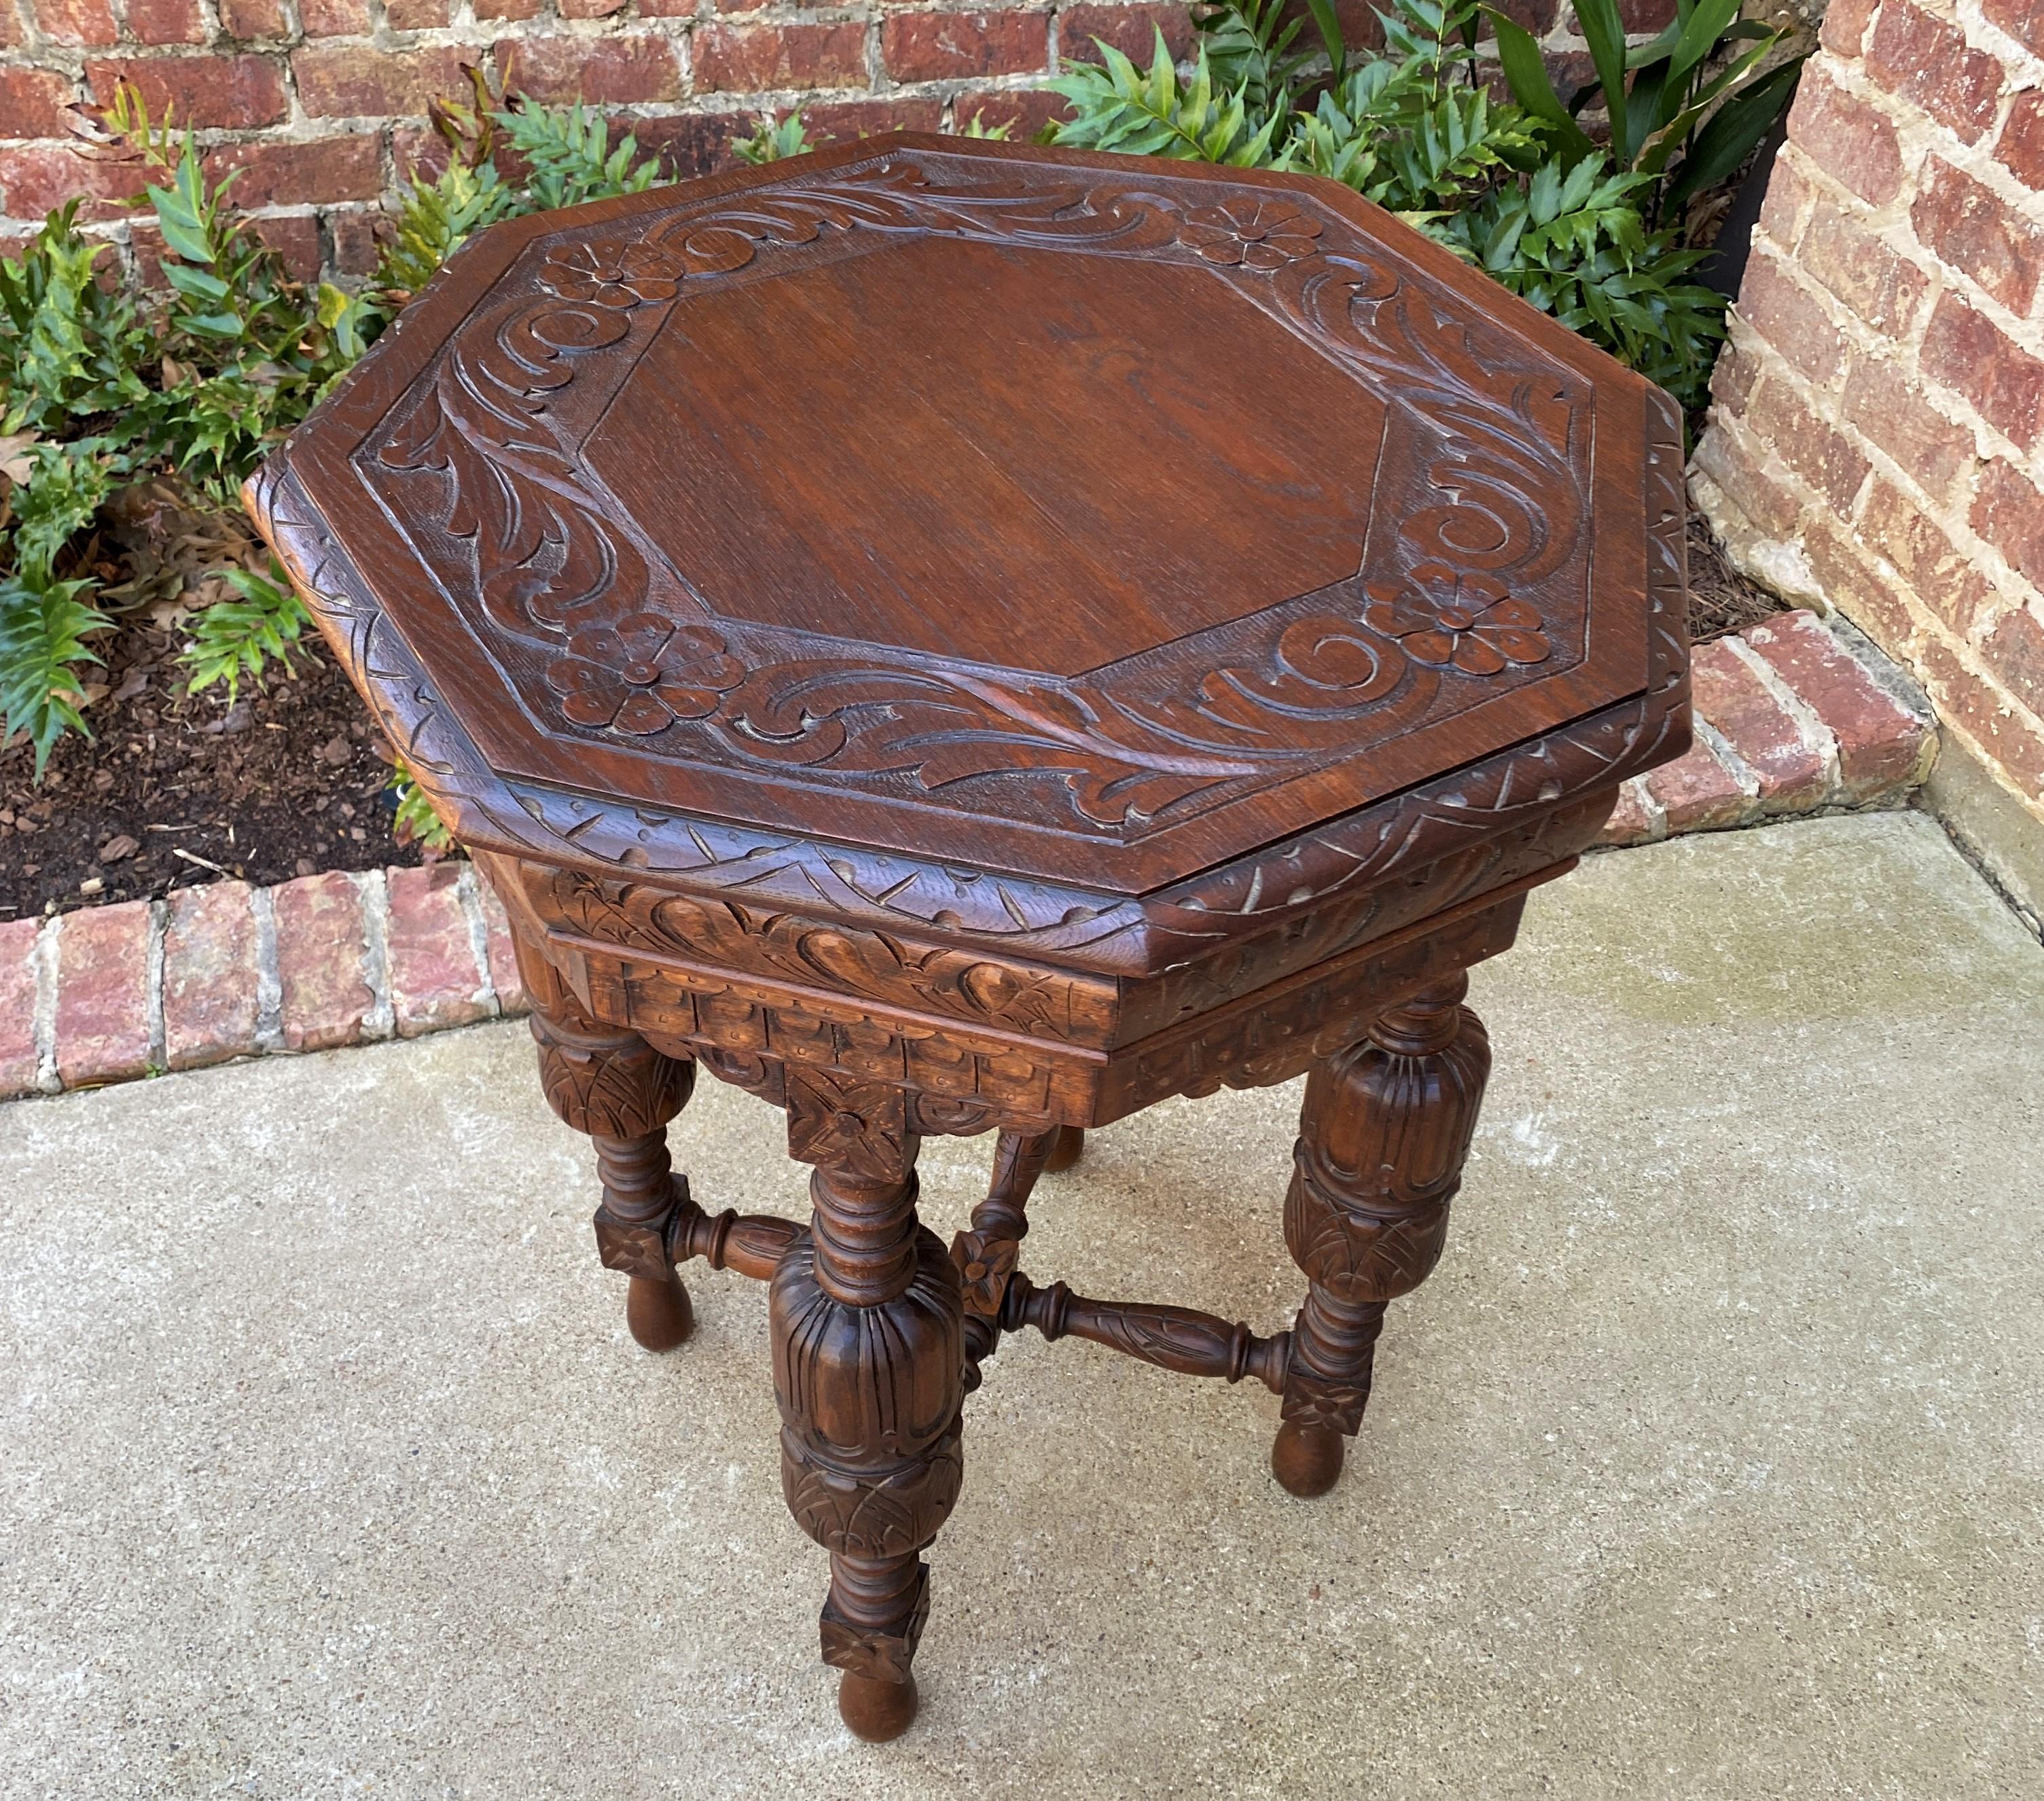 Antique French Octagonal Table Renaissance Revival Carved Oak 19th C For Sale 8